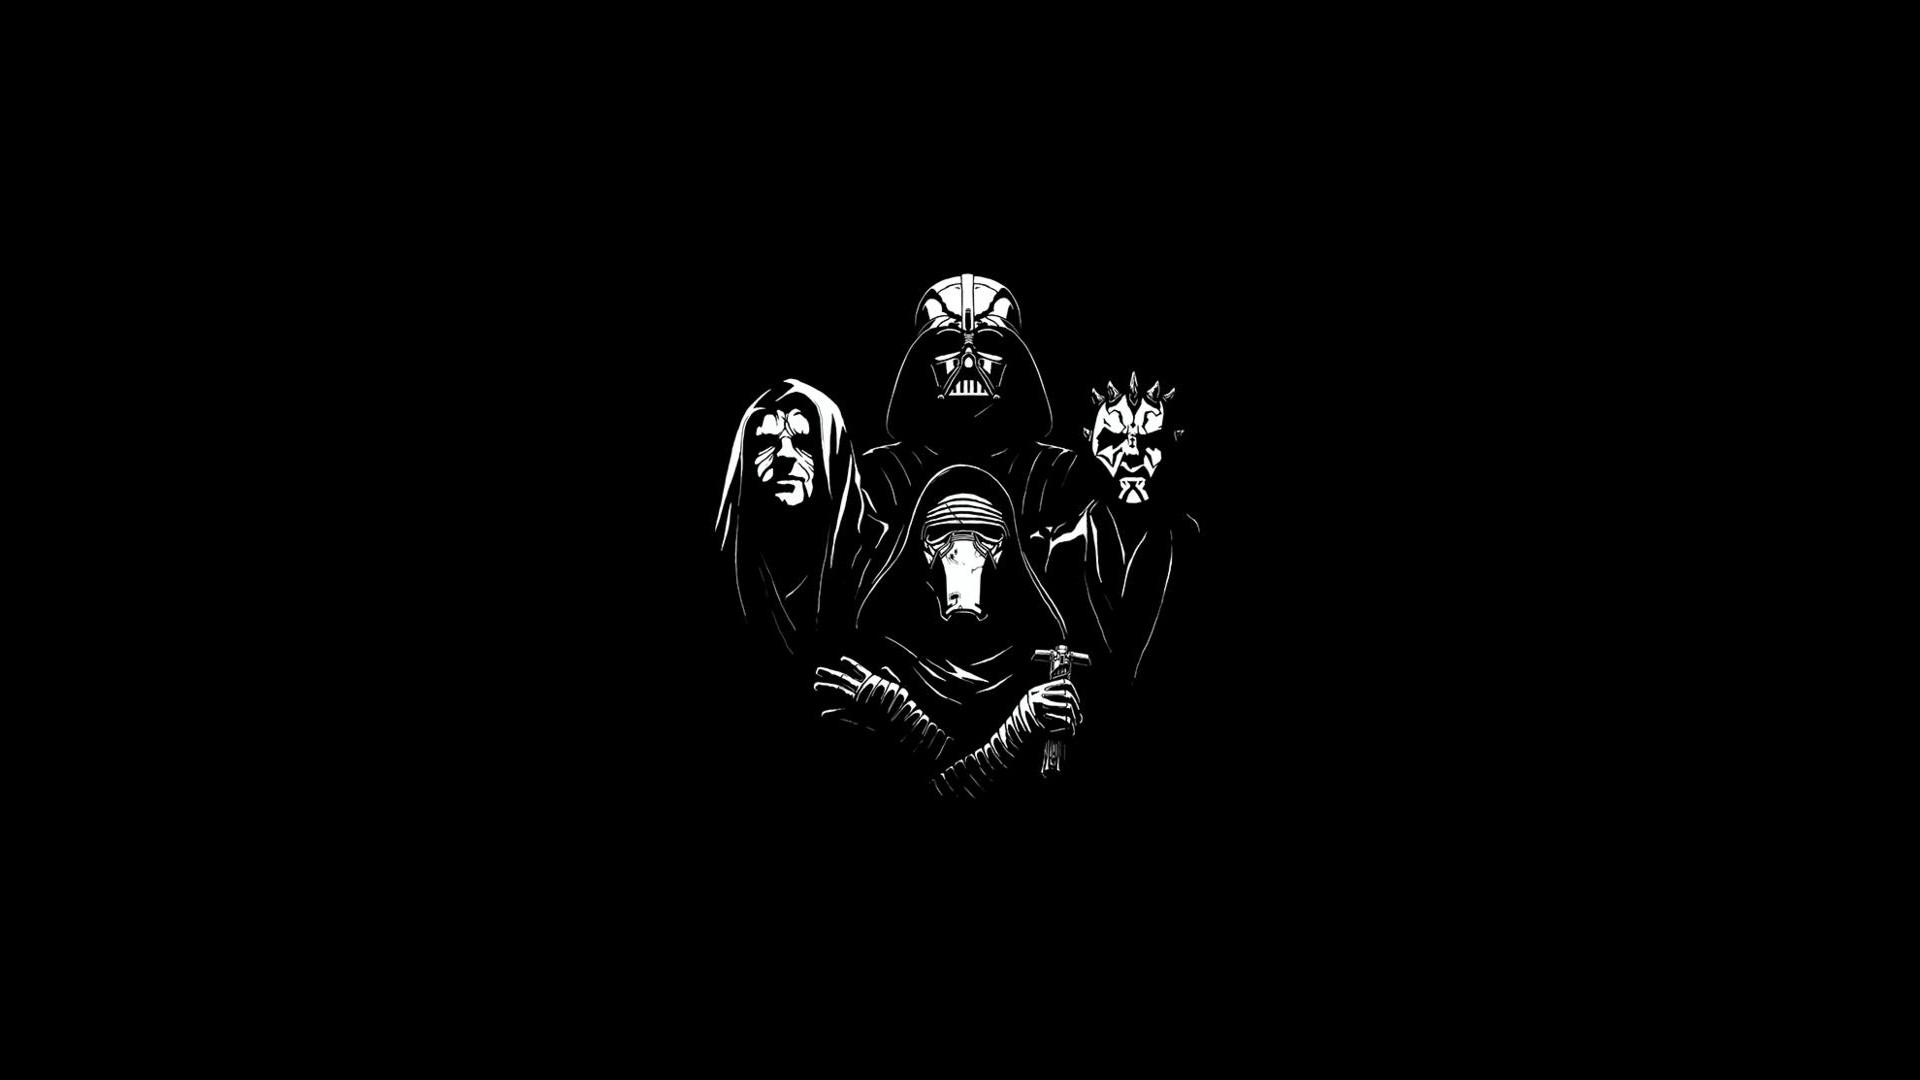 Wallpaper, Star Wars, logo, Darth Vader, Kylo Ren, Queen, Darth